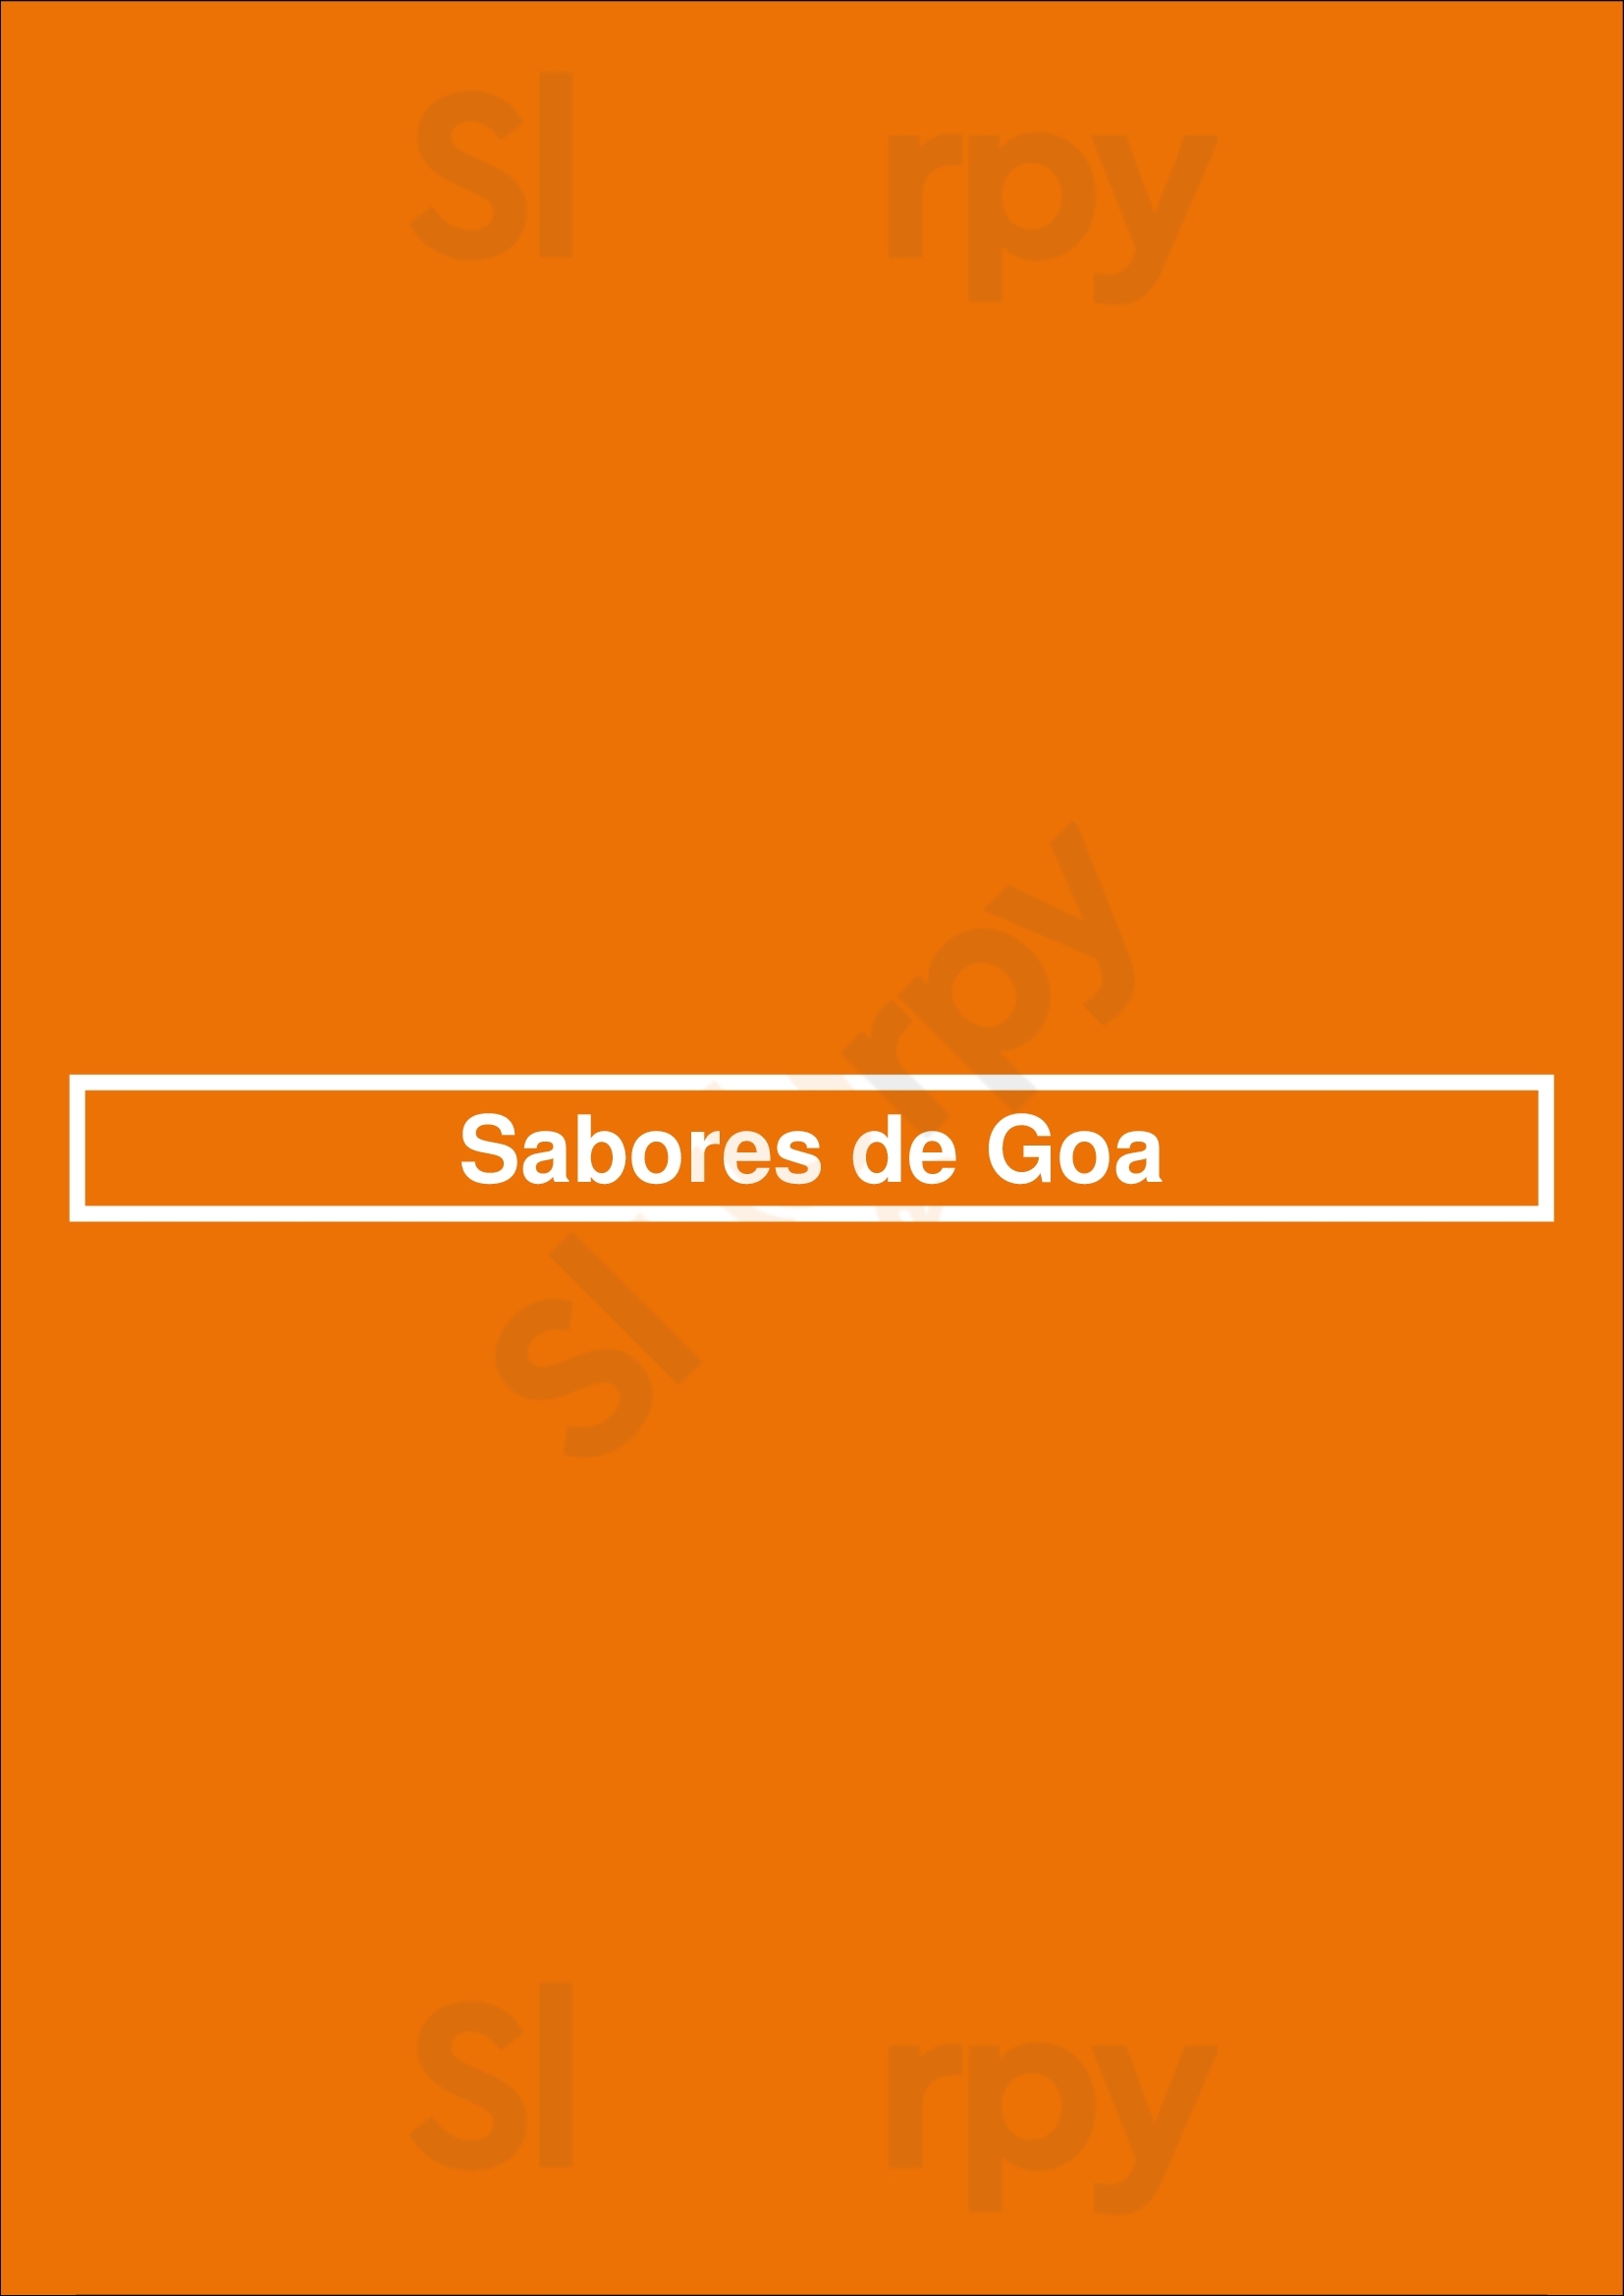 Sabores De Goa Lisboa Menu - 1